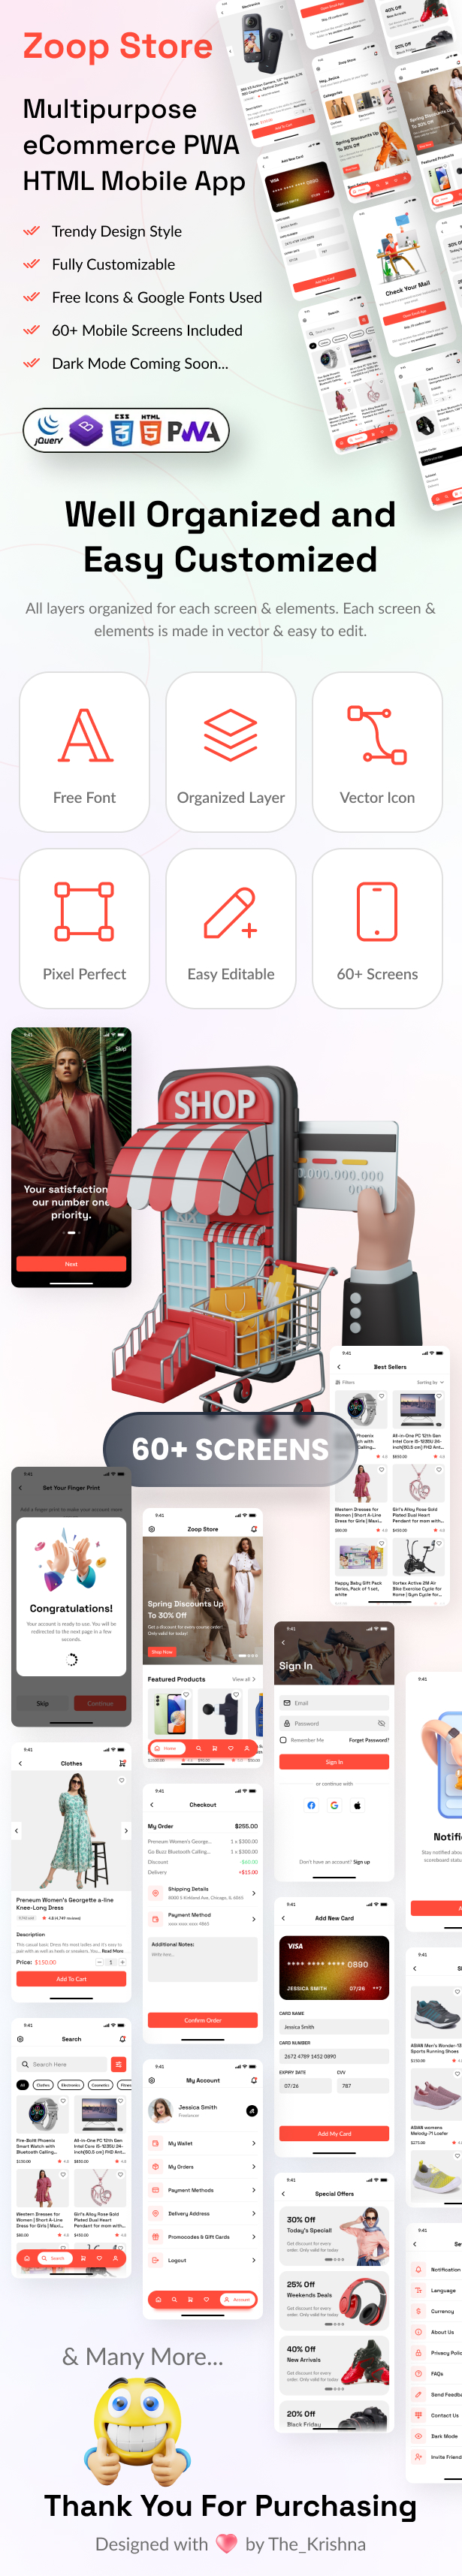 Multipurpose eCommerce Store PWA Mobile HTML Template - Zoop Retail Store - 4